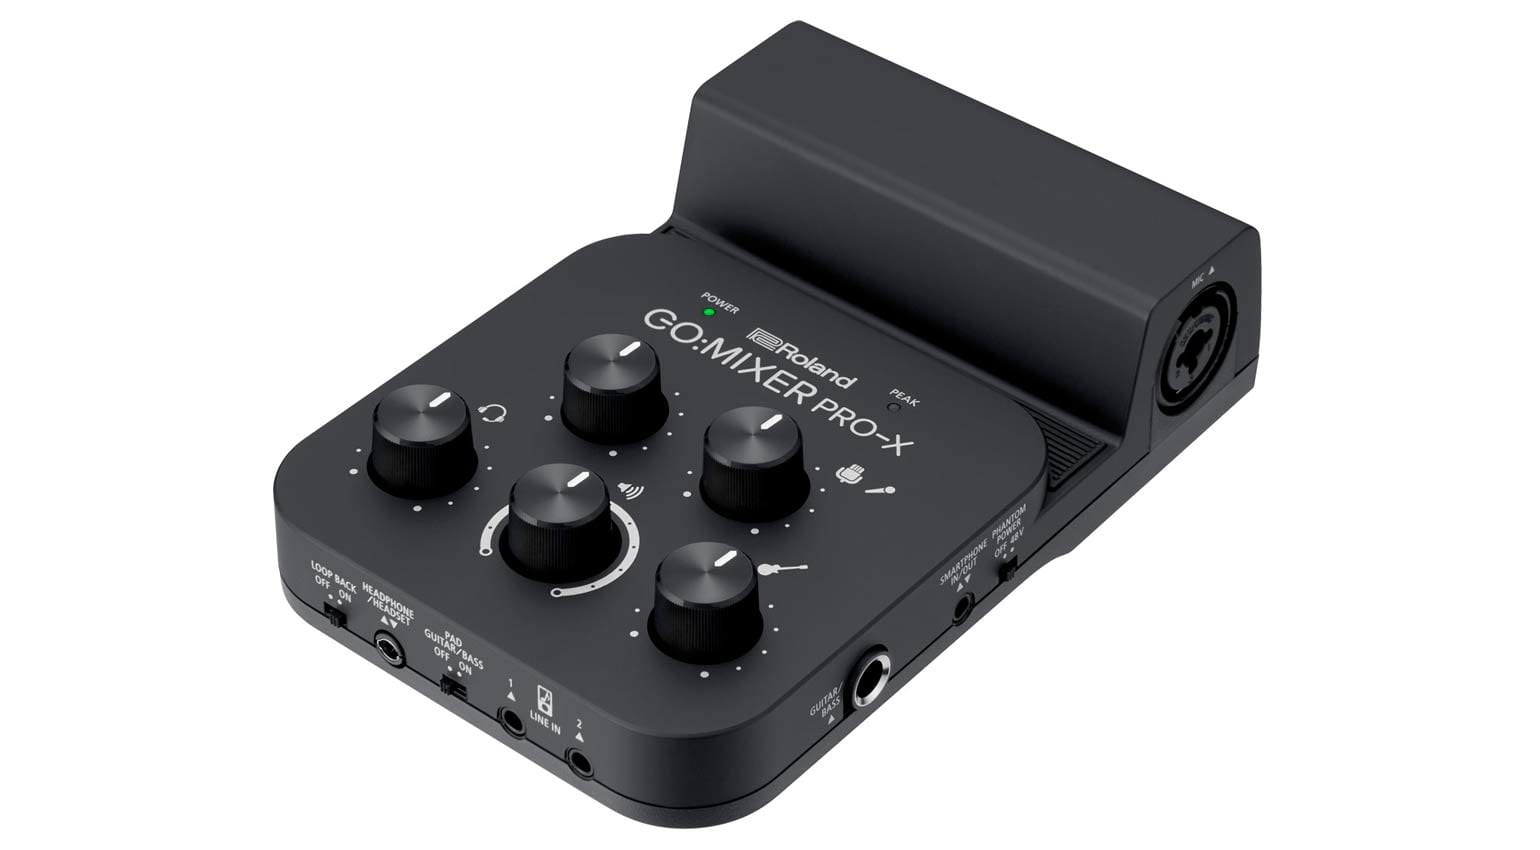 Roland GO:MIXER PRO-X: The audio mixer for smartphones gets an 